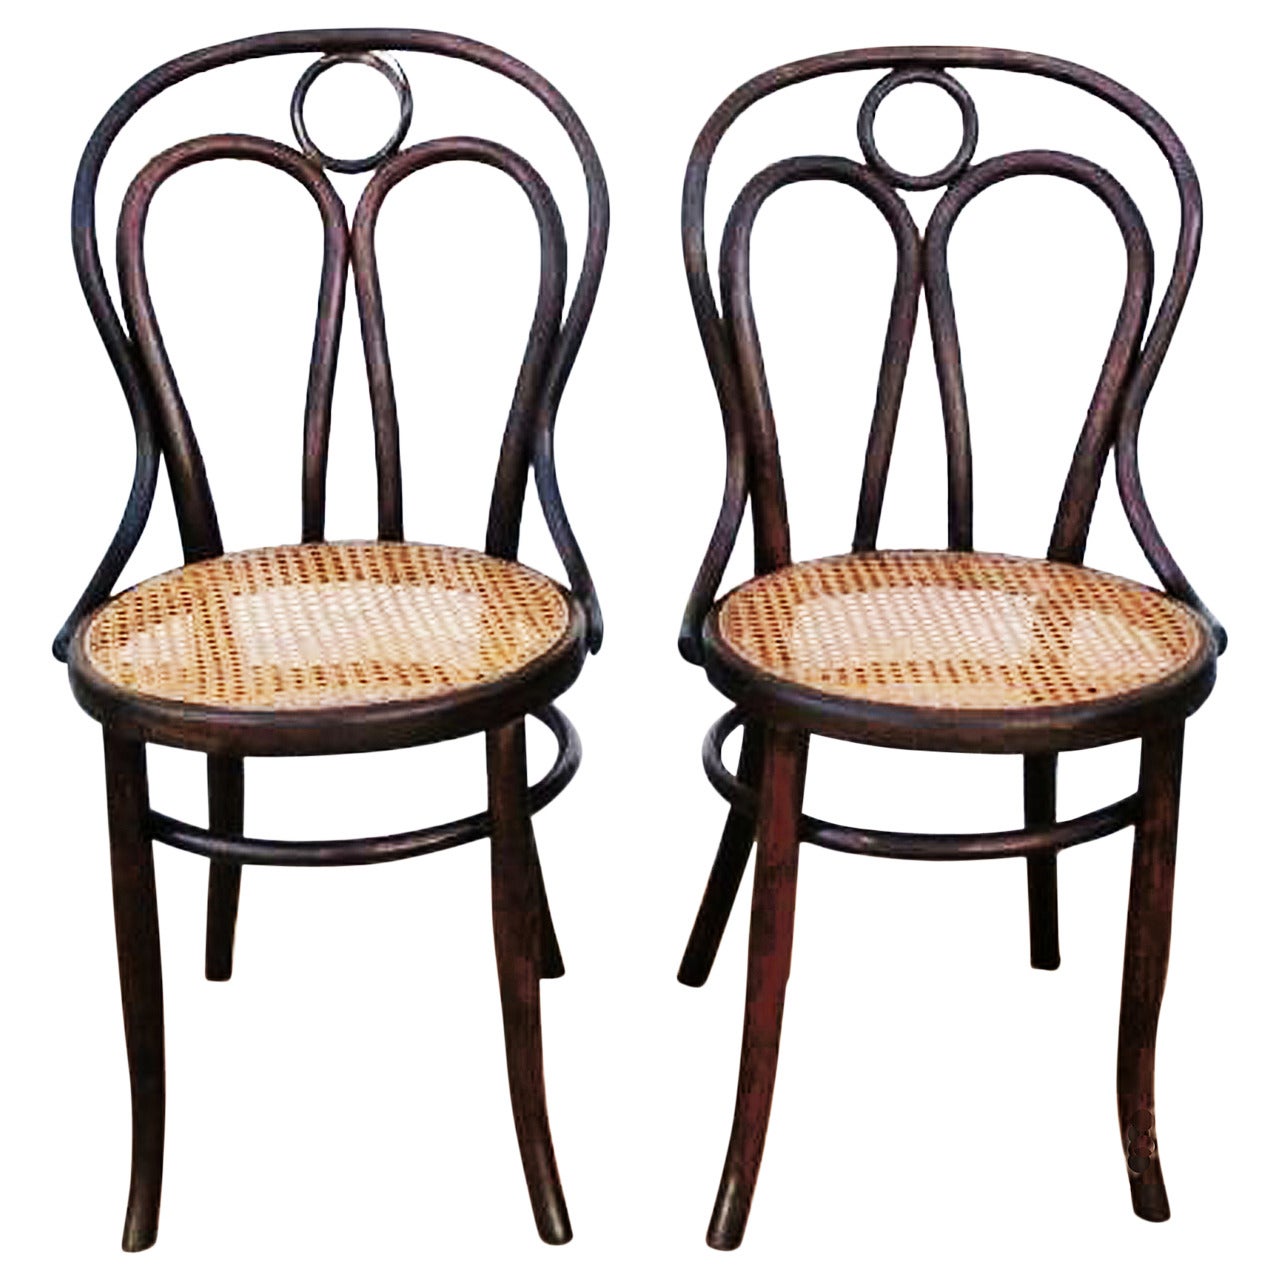 Pair of Kohn Chairs No. 36, the "Angel Chairs"